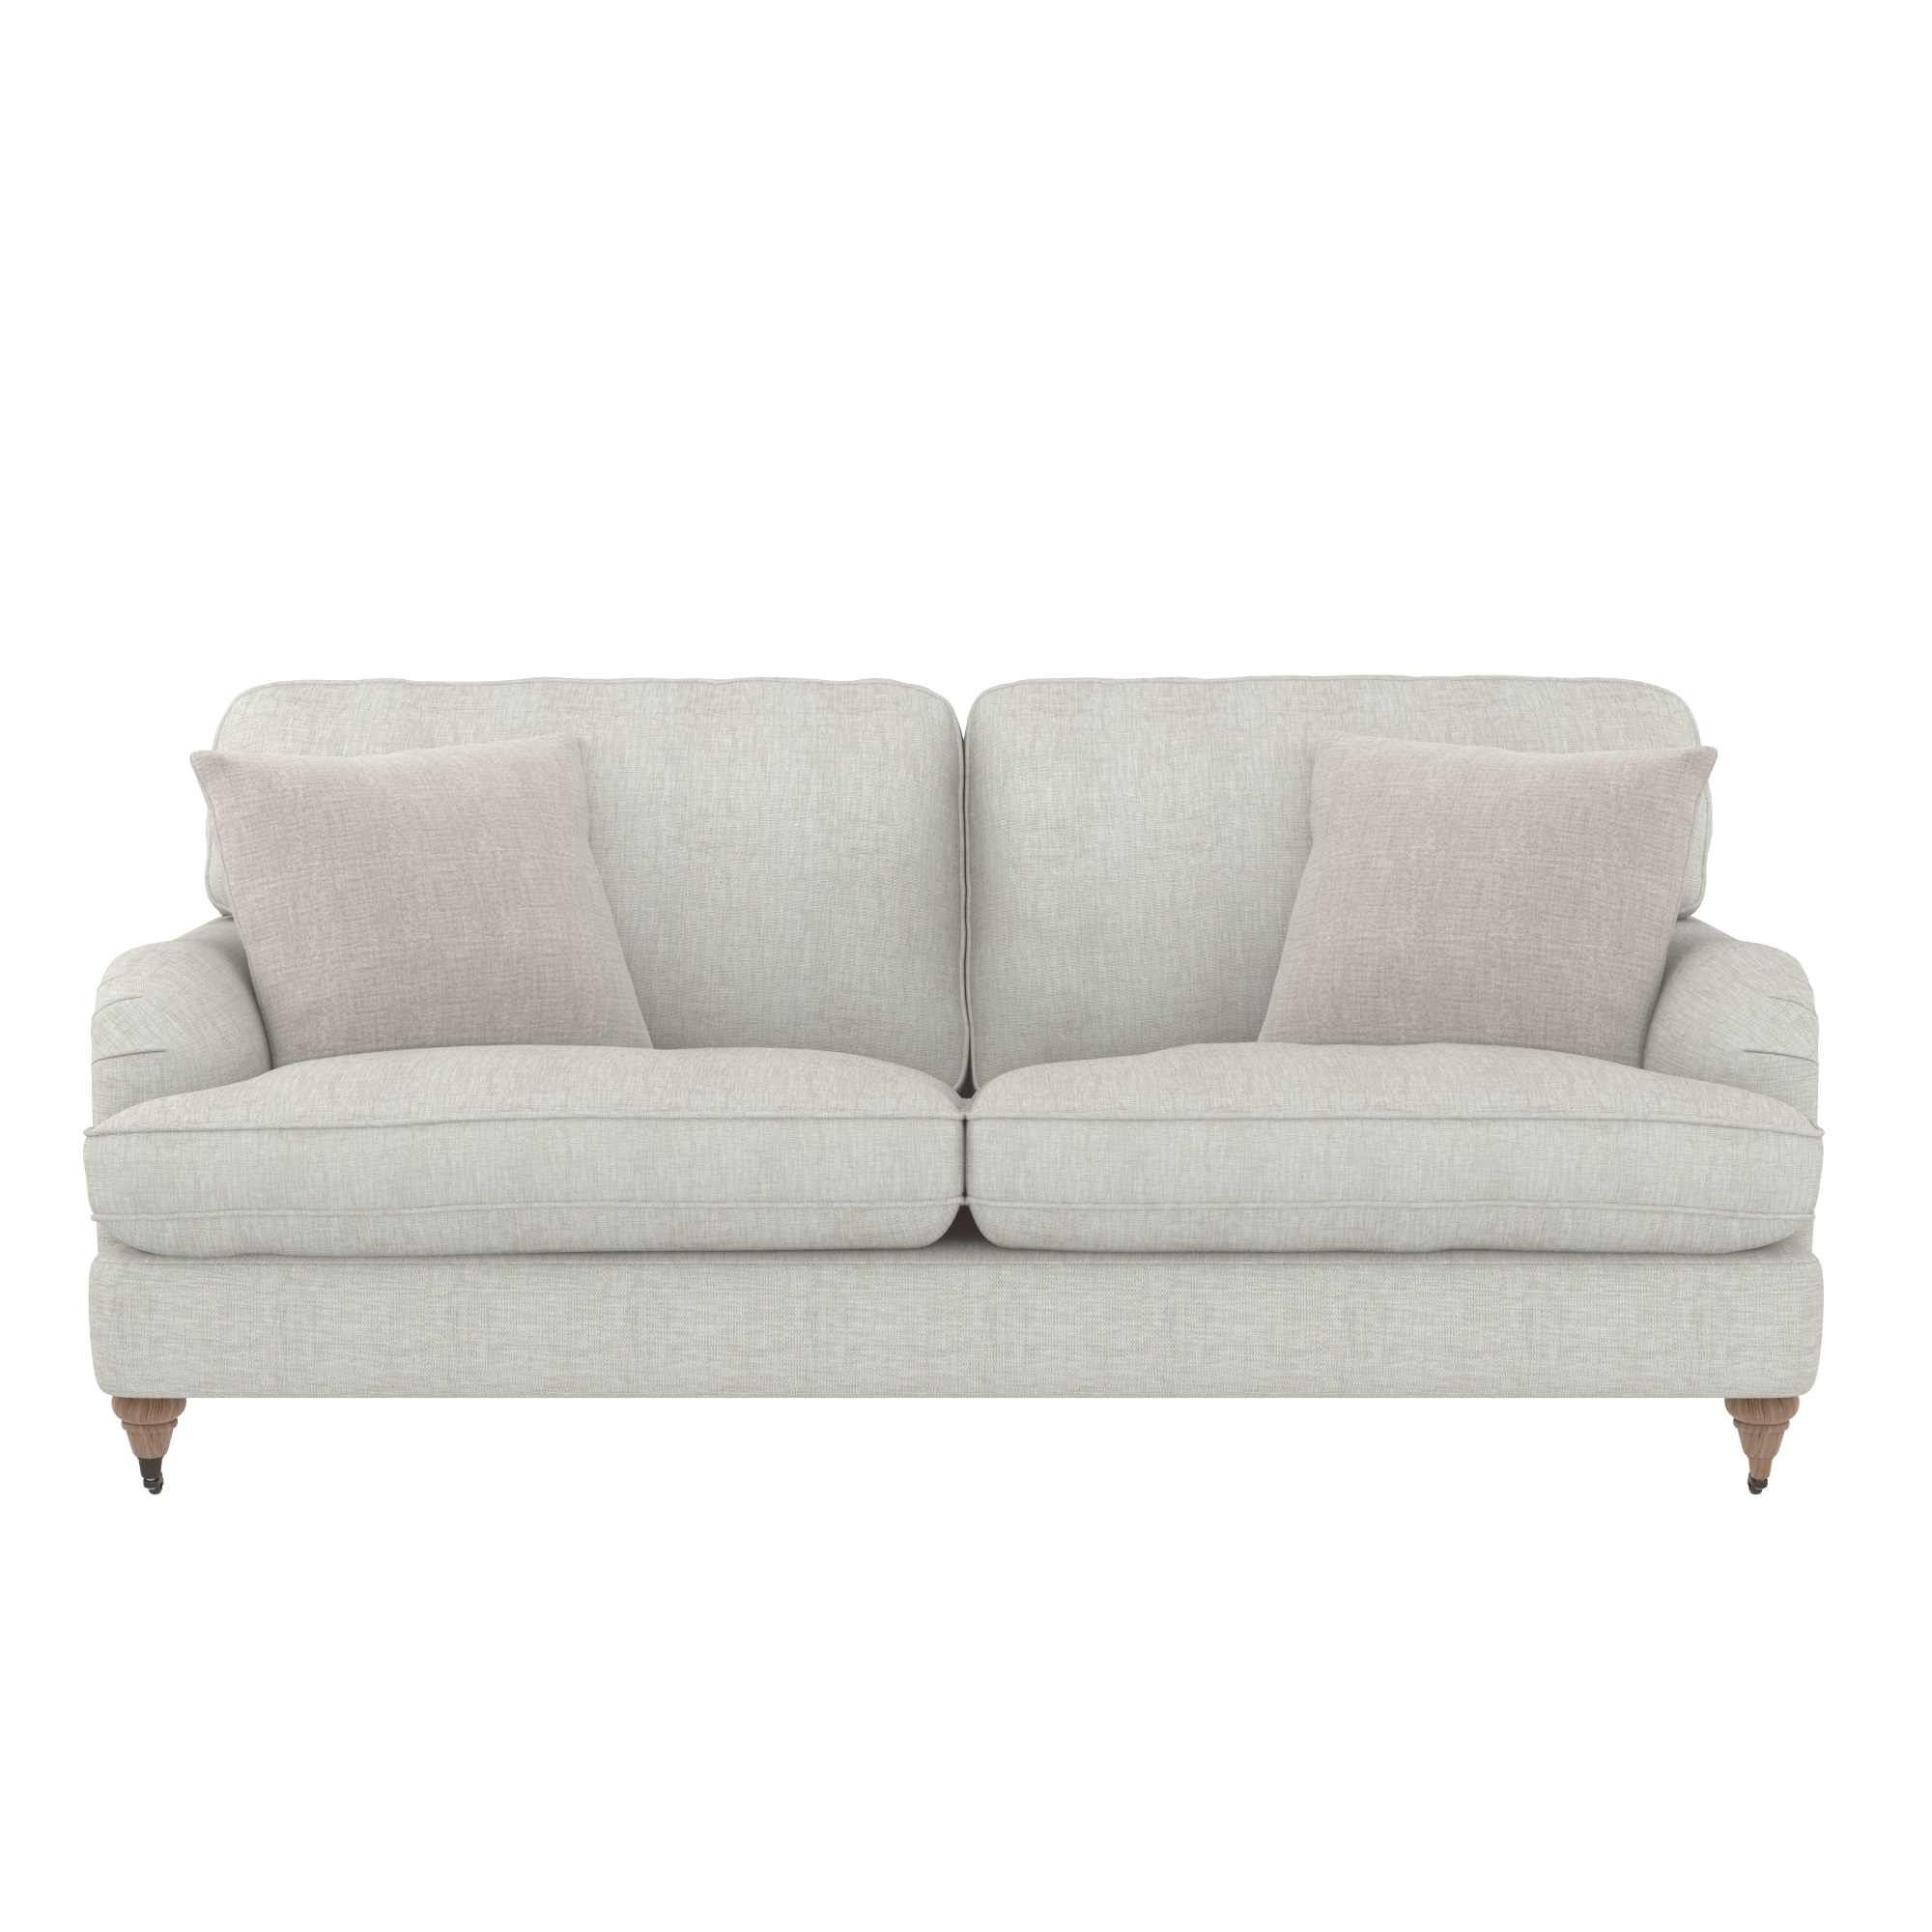 Sloane Large Sofa, Neutral Fabric | Barker & Stonehouse